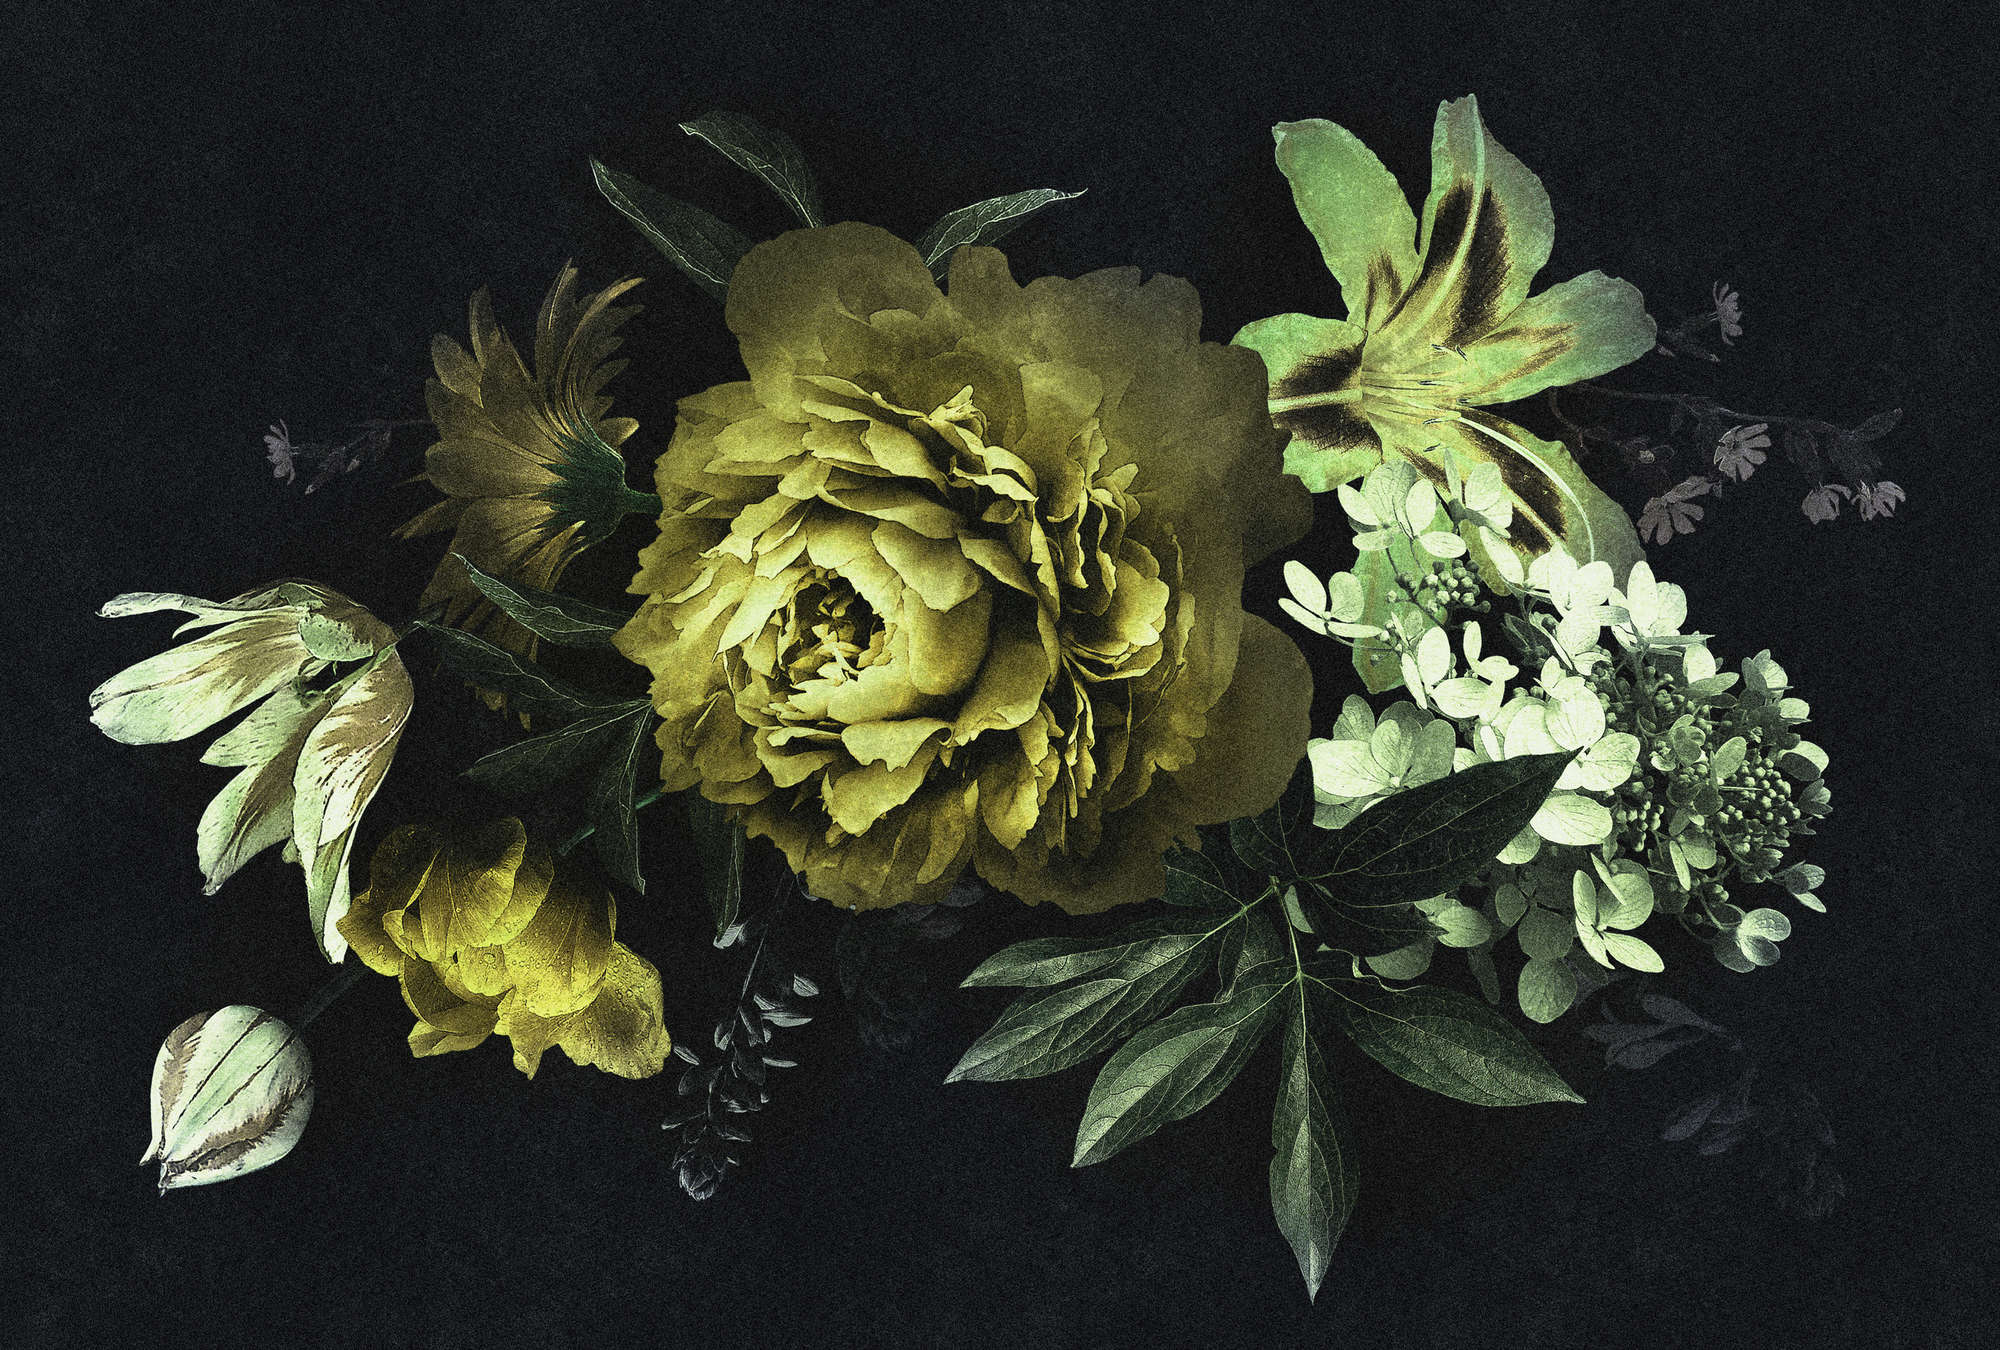             Drama queen 2 - Bouquet of Flowers Wallpaper in Cardboard Texture in Green - Yellow, Black | Matt Smooth Non-woven
        